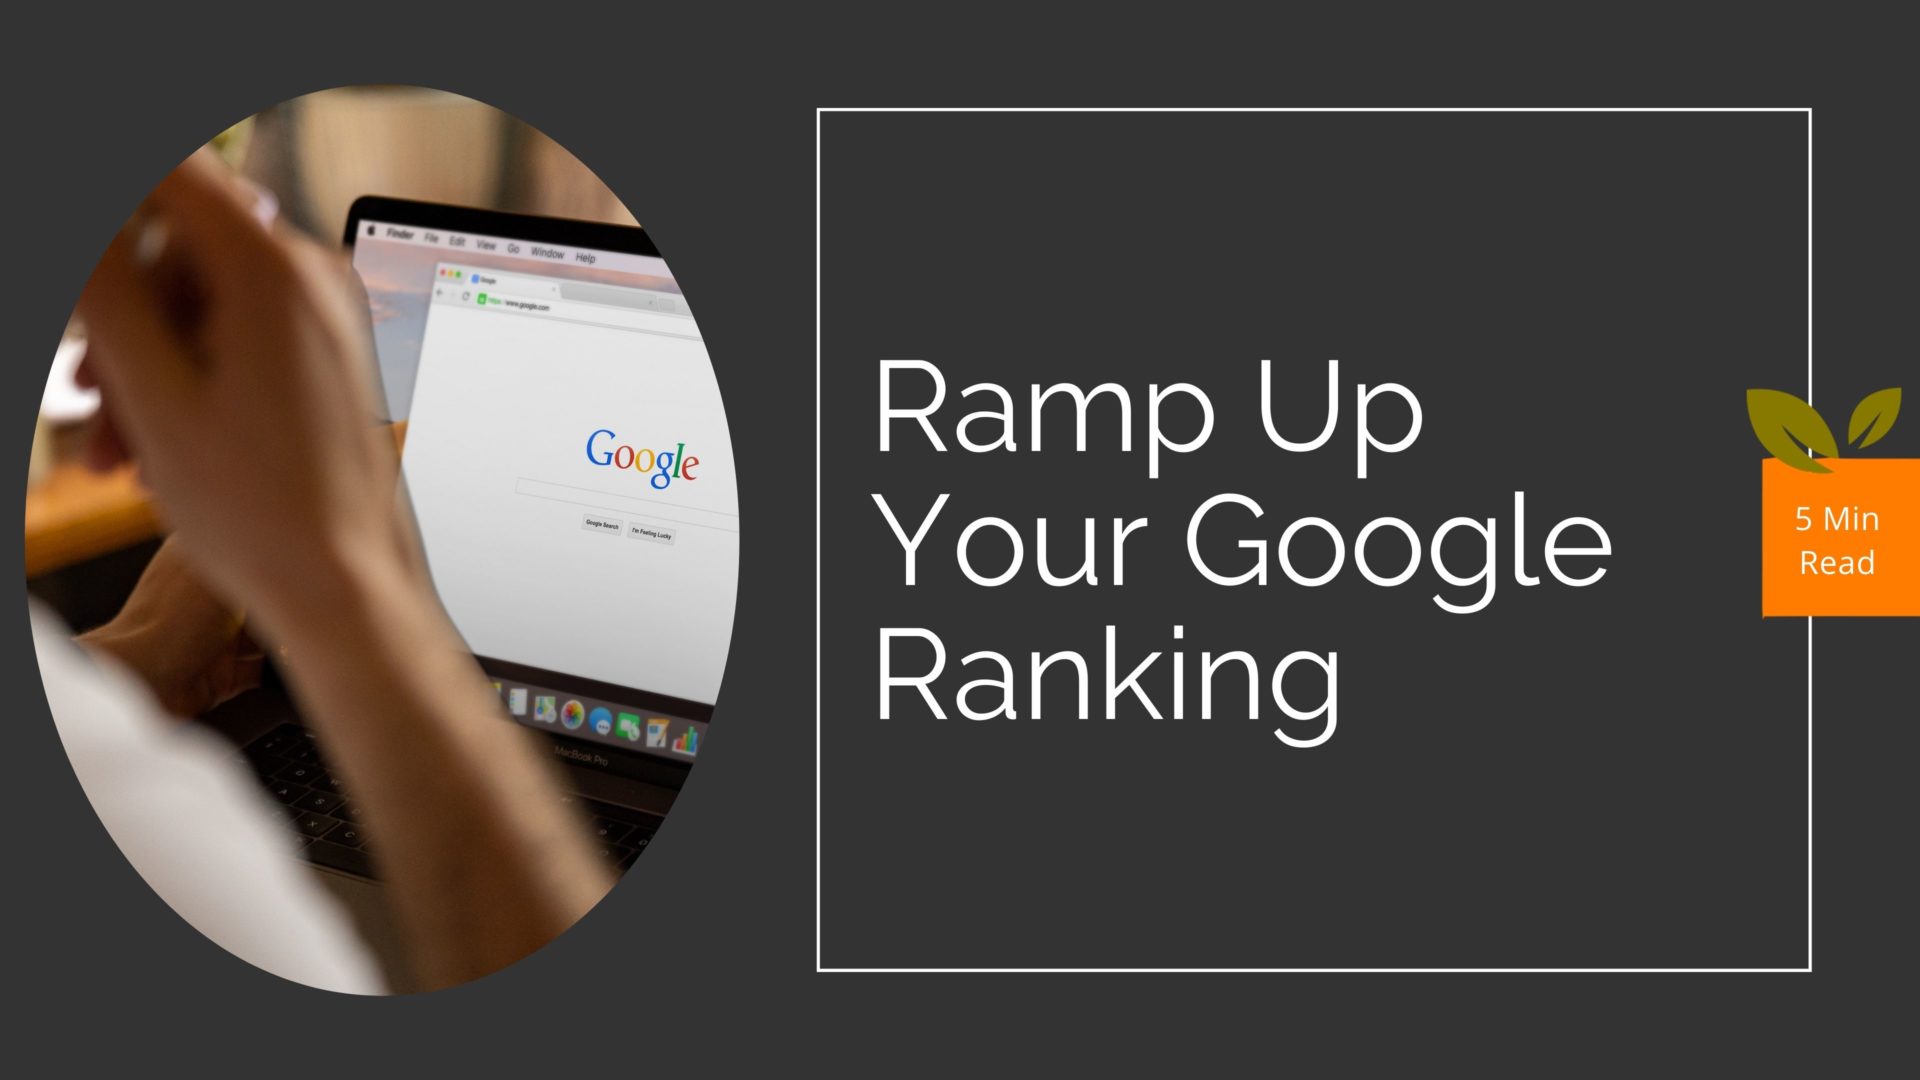 Ramp Up Your Google Ranking